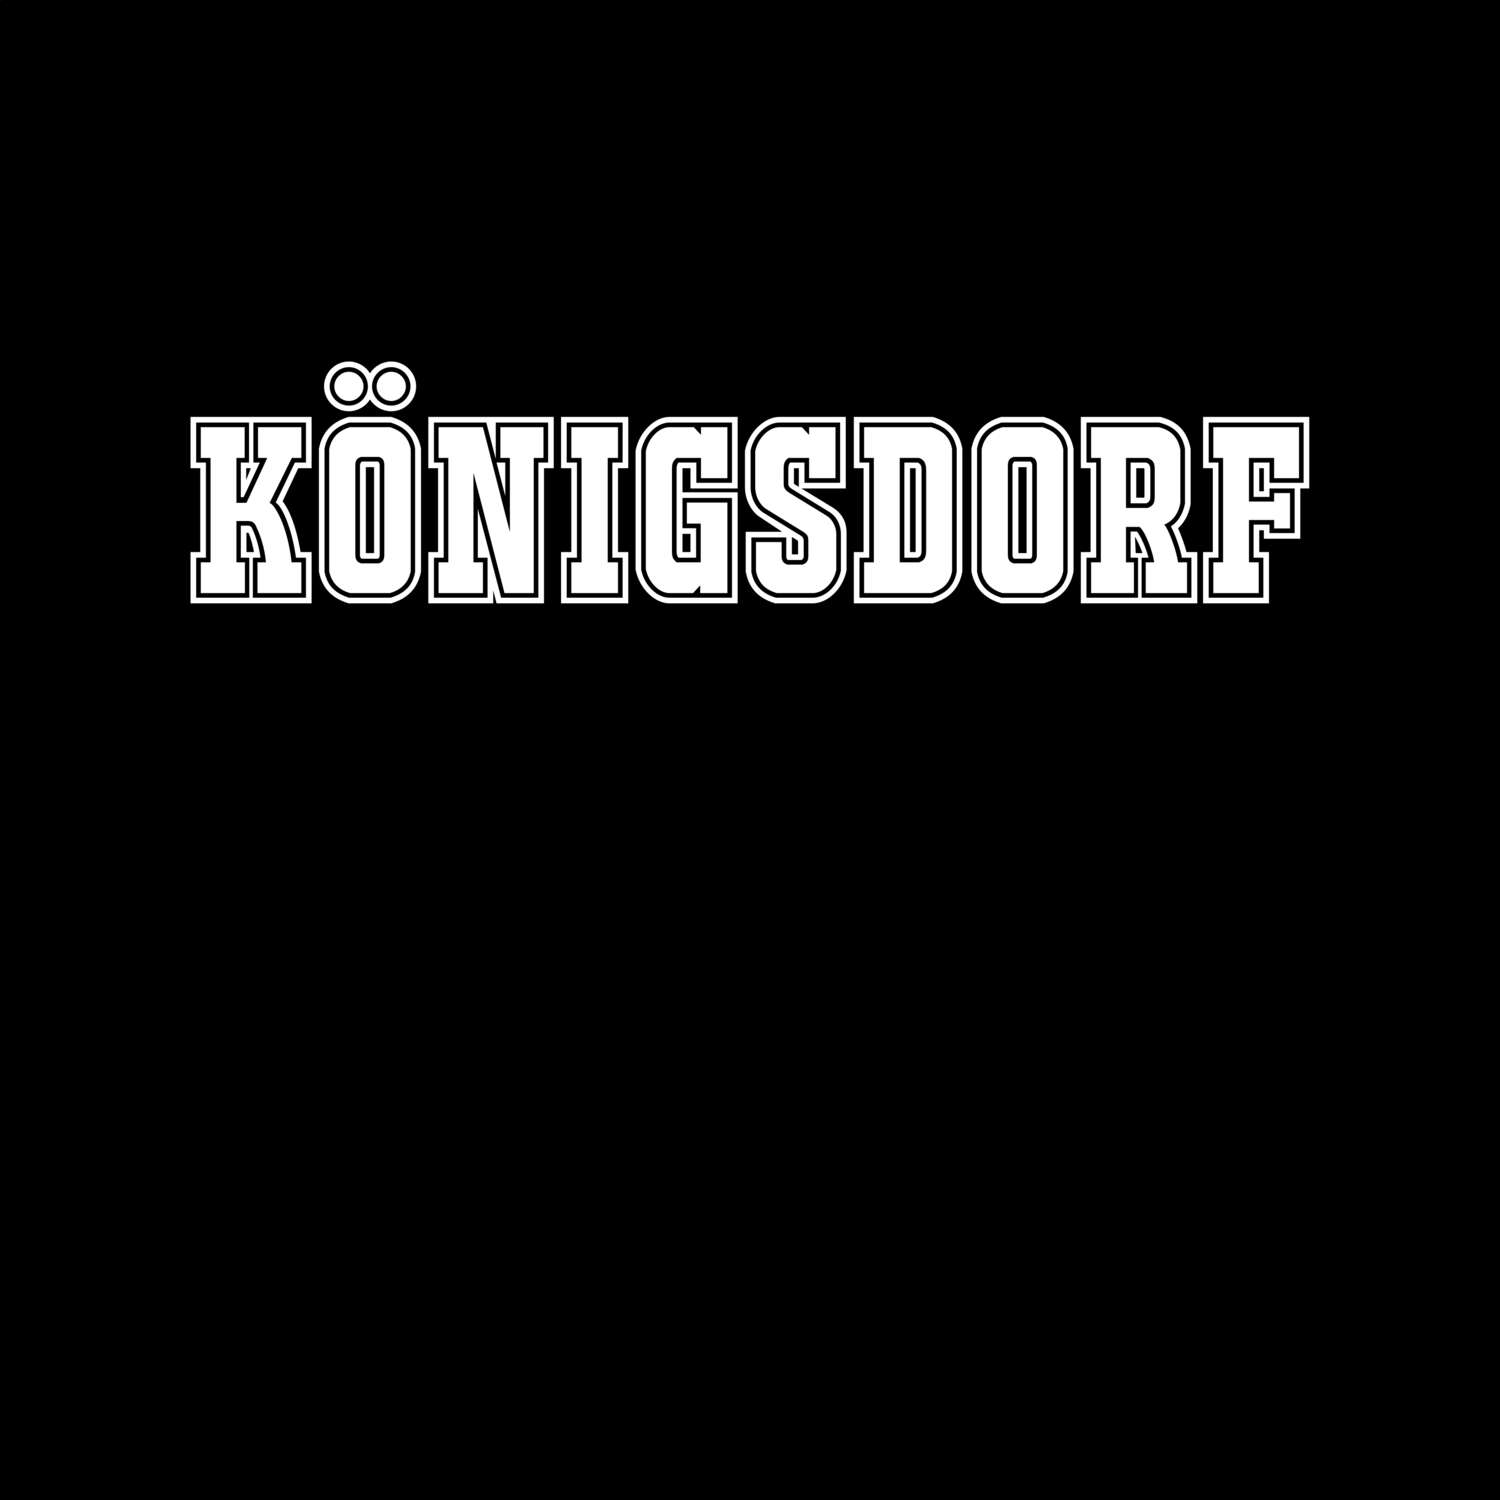 Königsdorf T-Shirt »Classic«